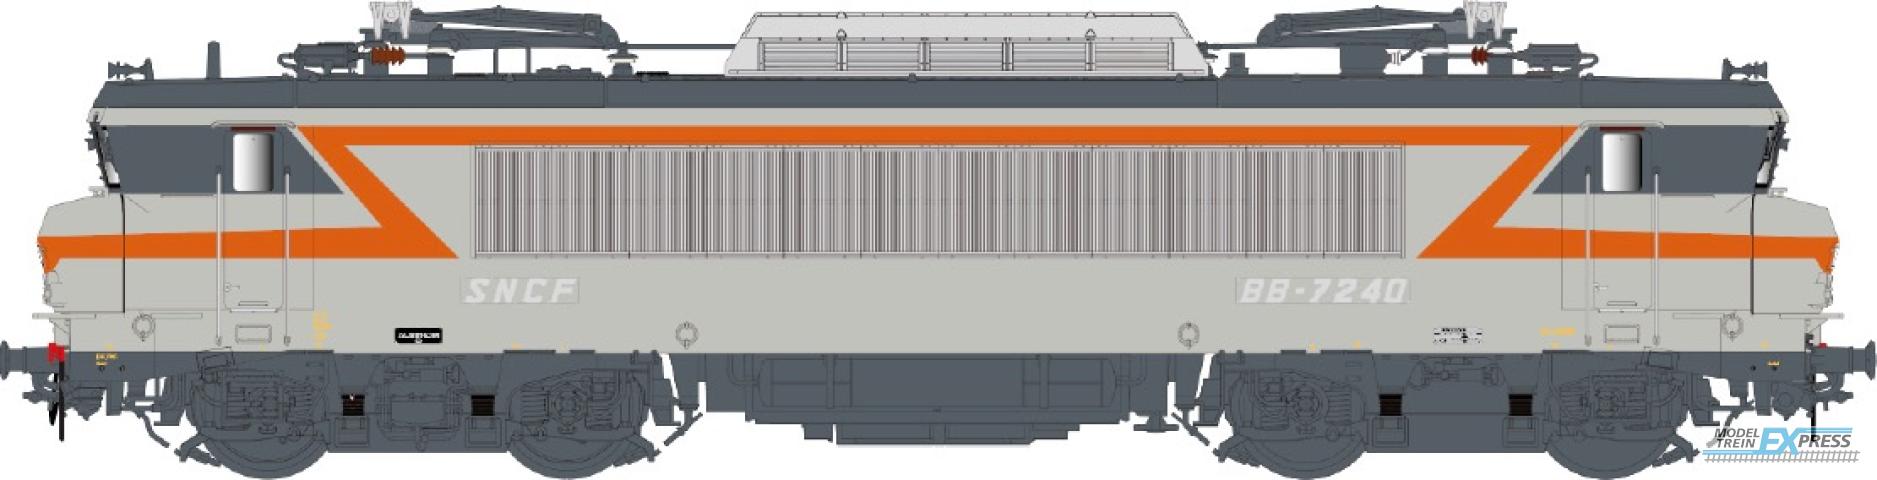 LS Models 11707S BB7240, betongrijs/oranje, nummerplaten / Ep. IV / SNCF / HO / AC SOUND / 1 P.